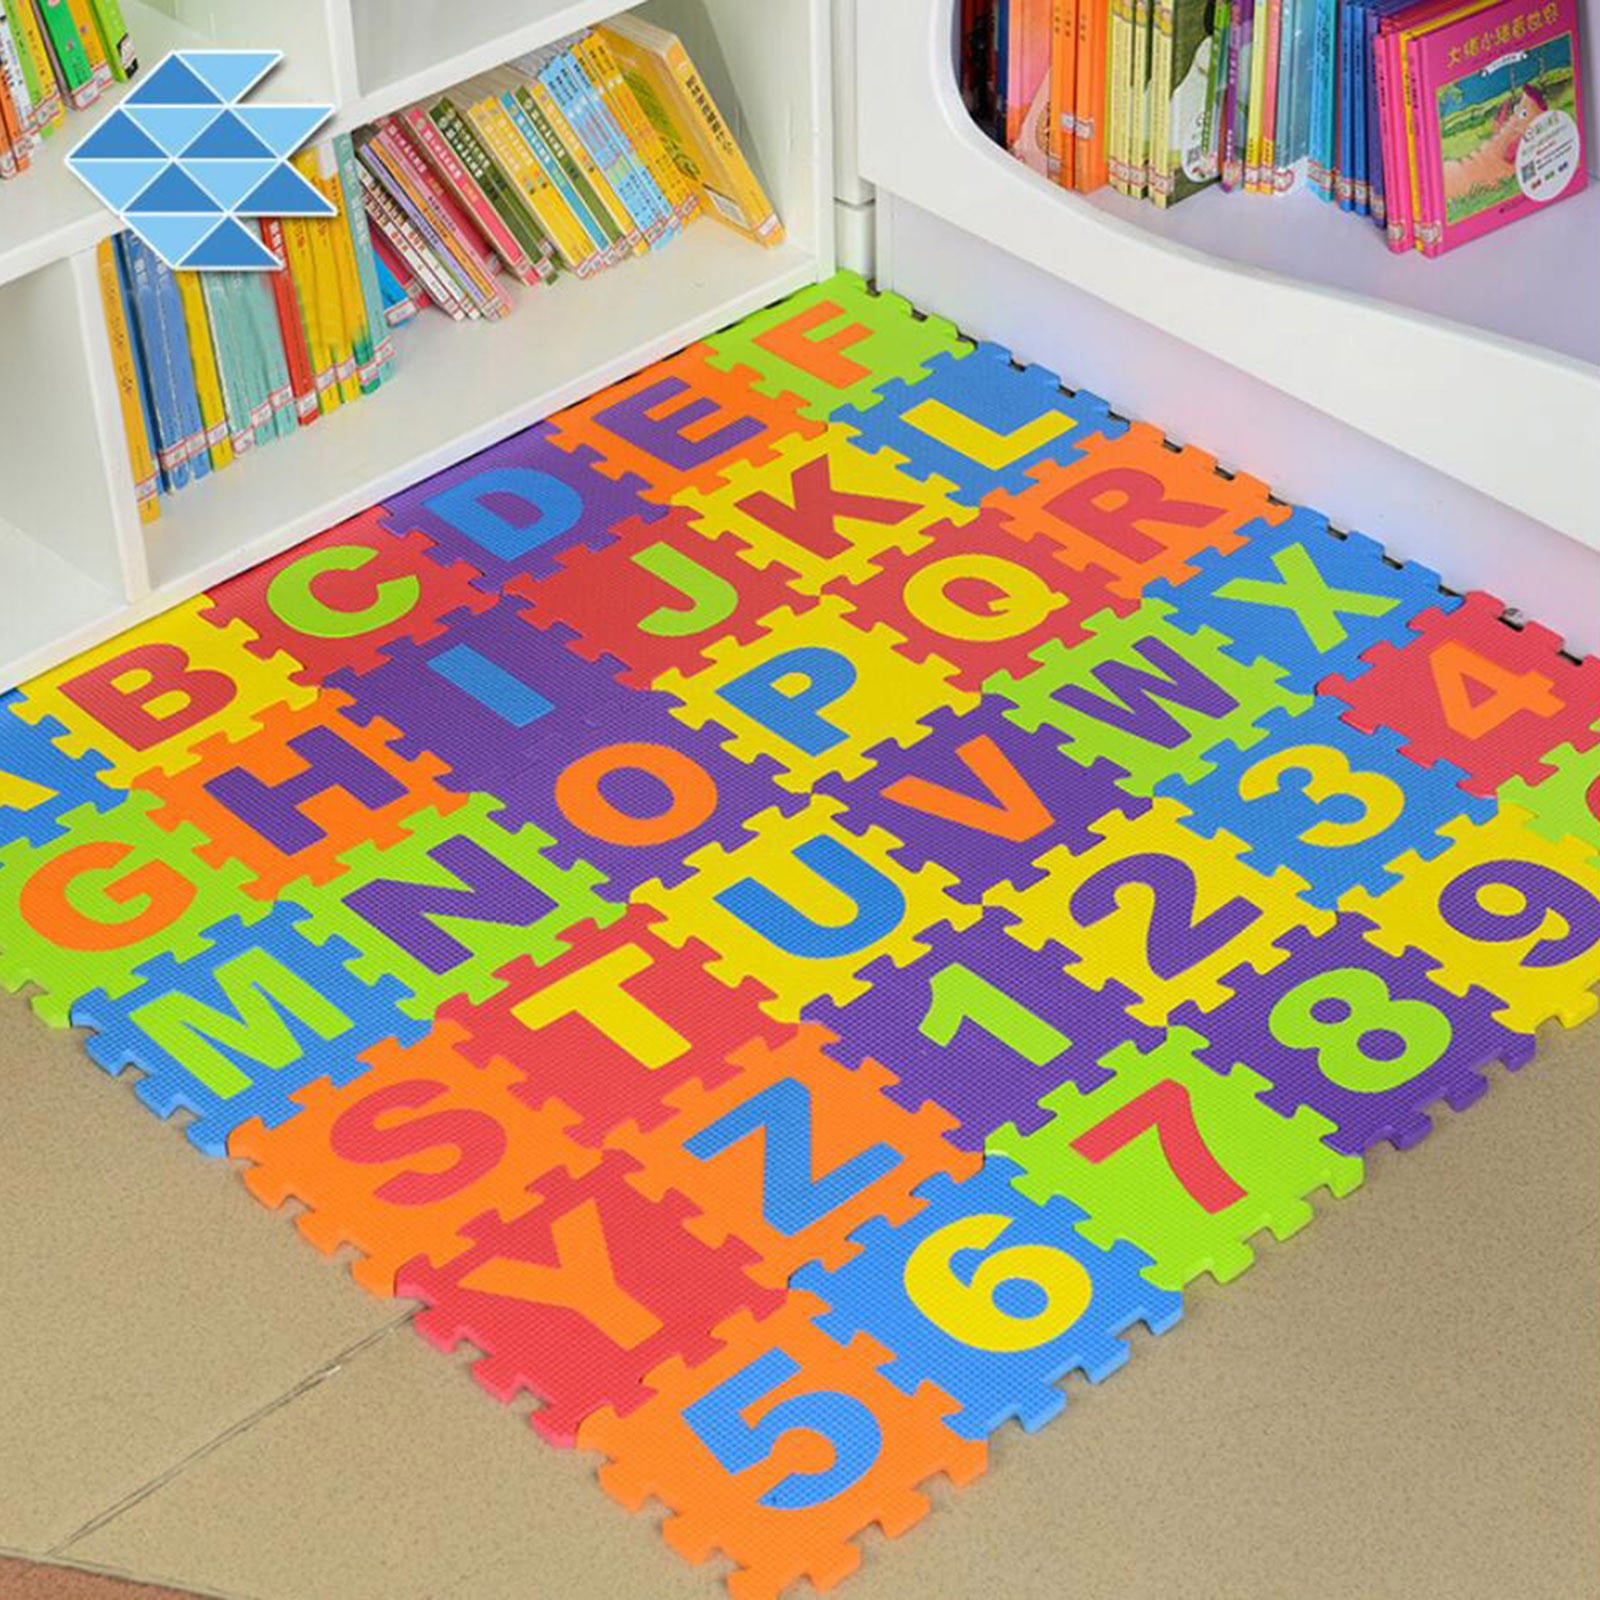  HoKiis 10 Pcs Puzzle Floor Mat Tiles, Plush Carpet